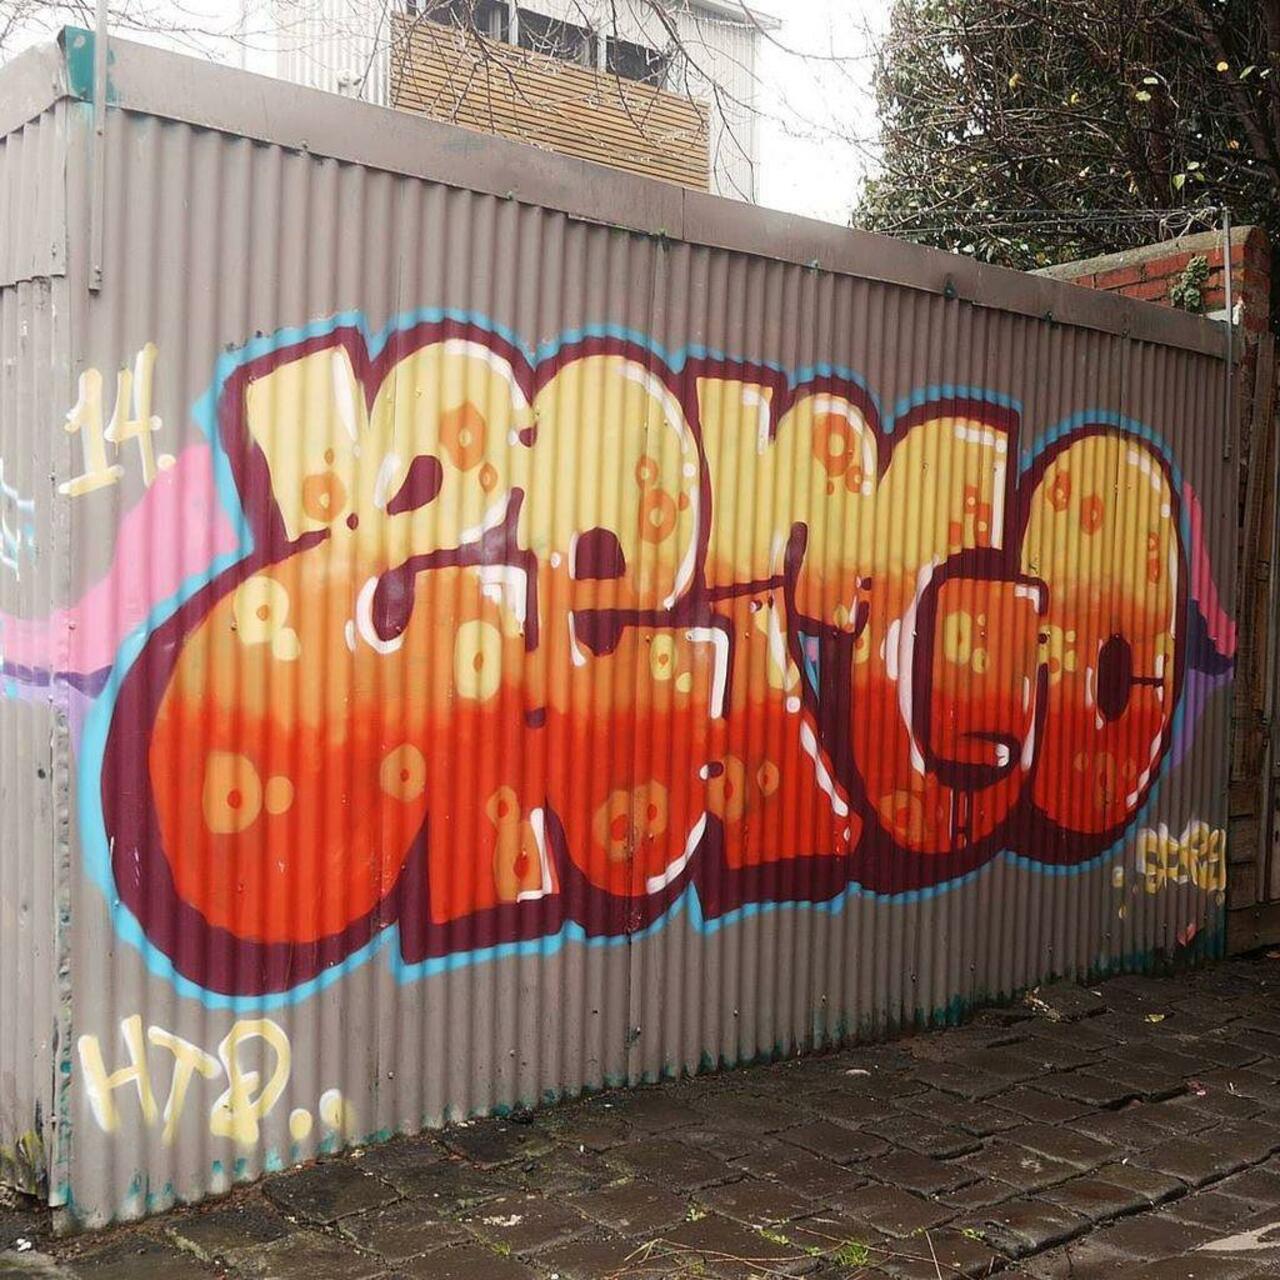 #streetart #urbanart #graffiti #graff #streetartmelbourne #streetartofficial #instagraffiti #urbanexploration #urba… http://t.co/EsKjuwXNof